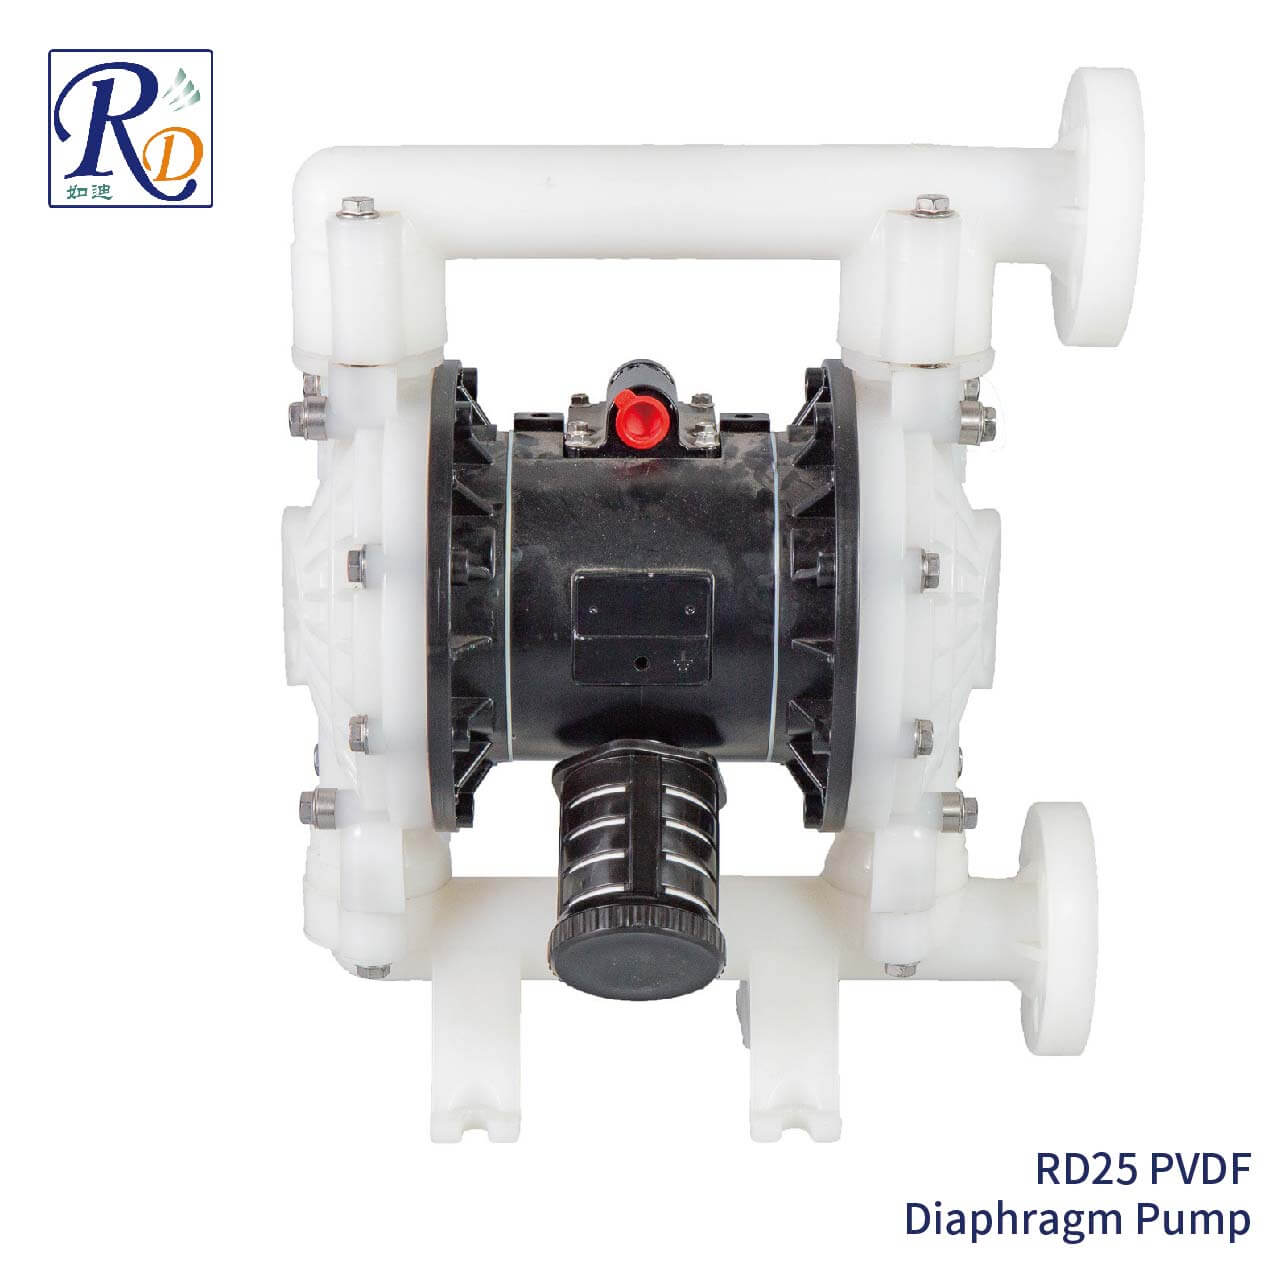 RD25 PVDF Diaphragm Pump